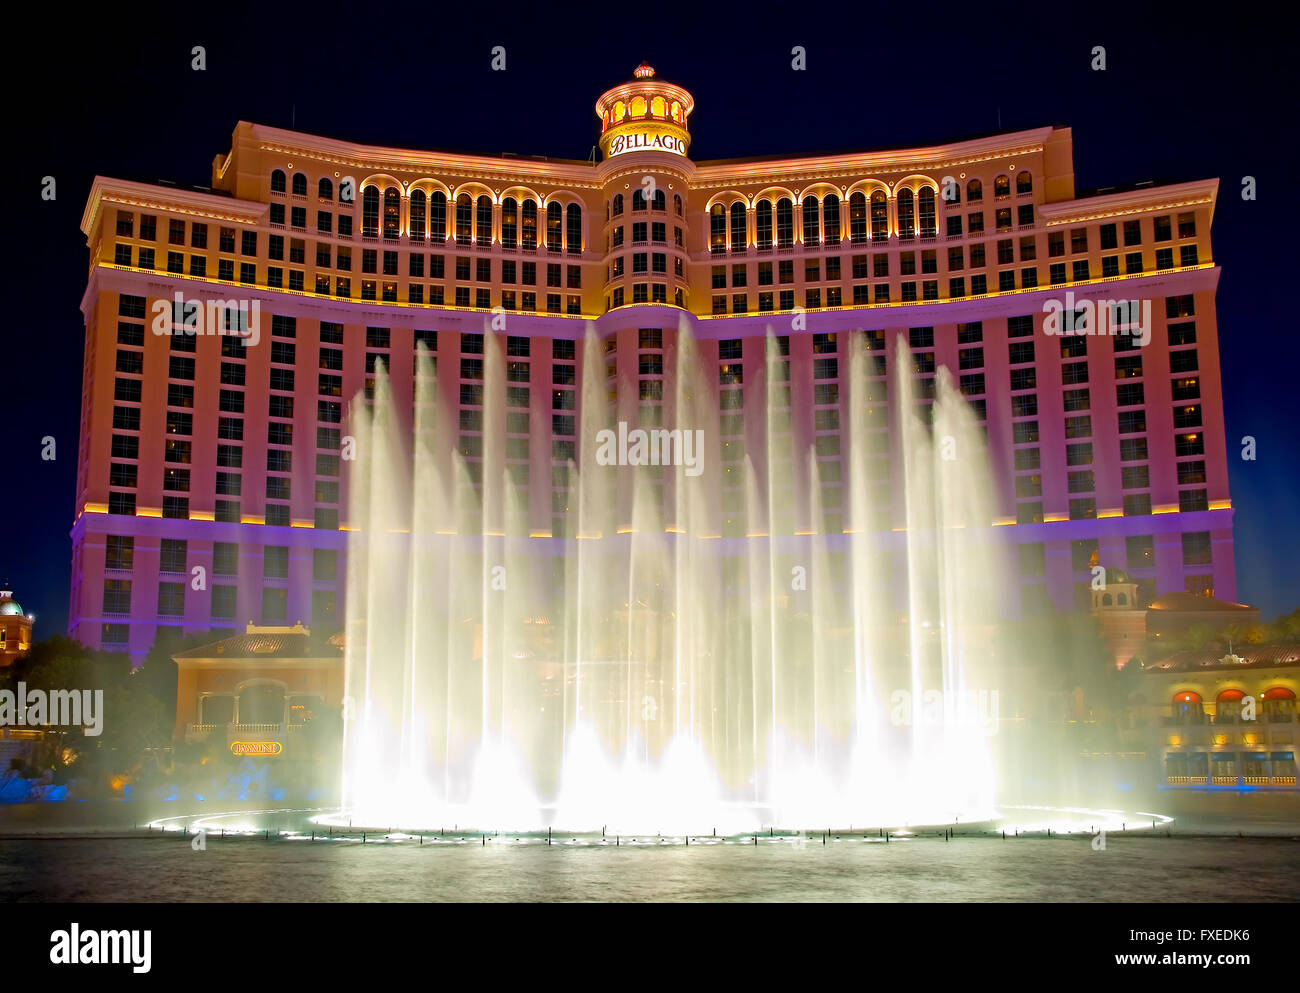 Dancing Water Fountain in Las Vegas Stock Photo - Alamy